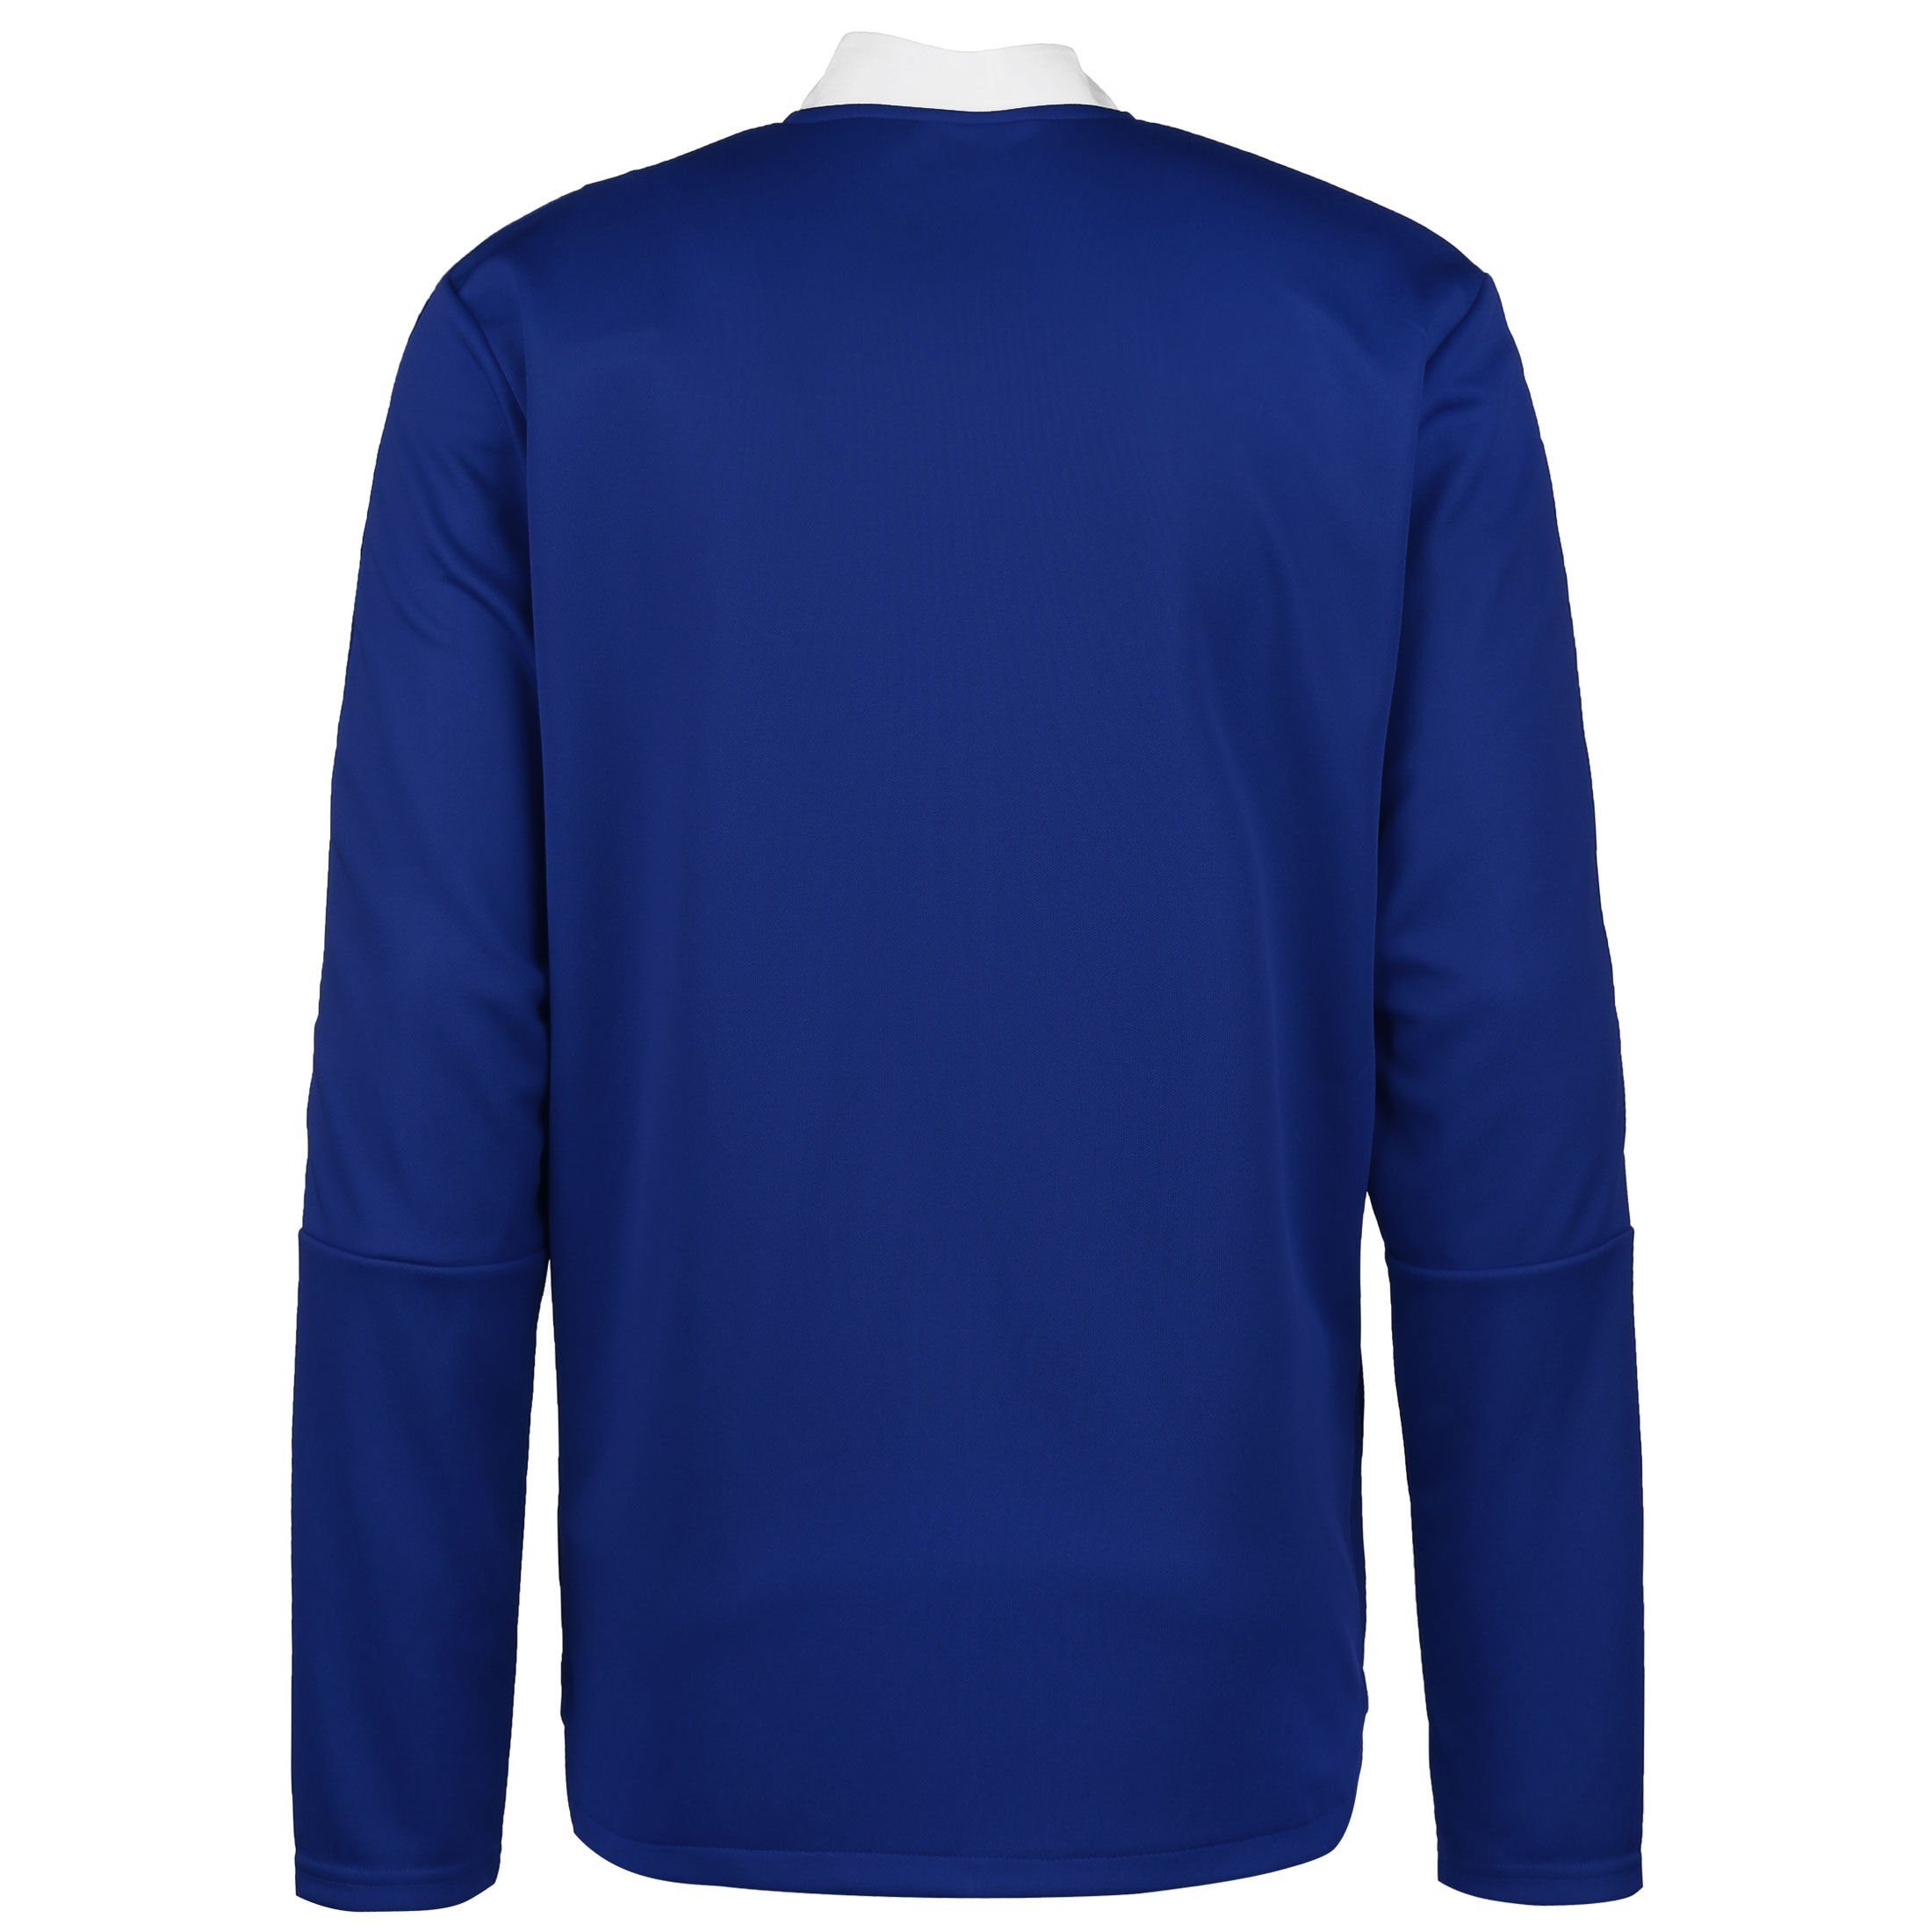 21 Herren Tiro weiß blau Performance Trainingsjacke adidas Sweatjacke /